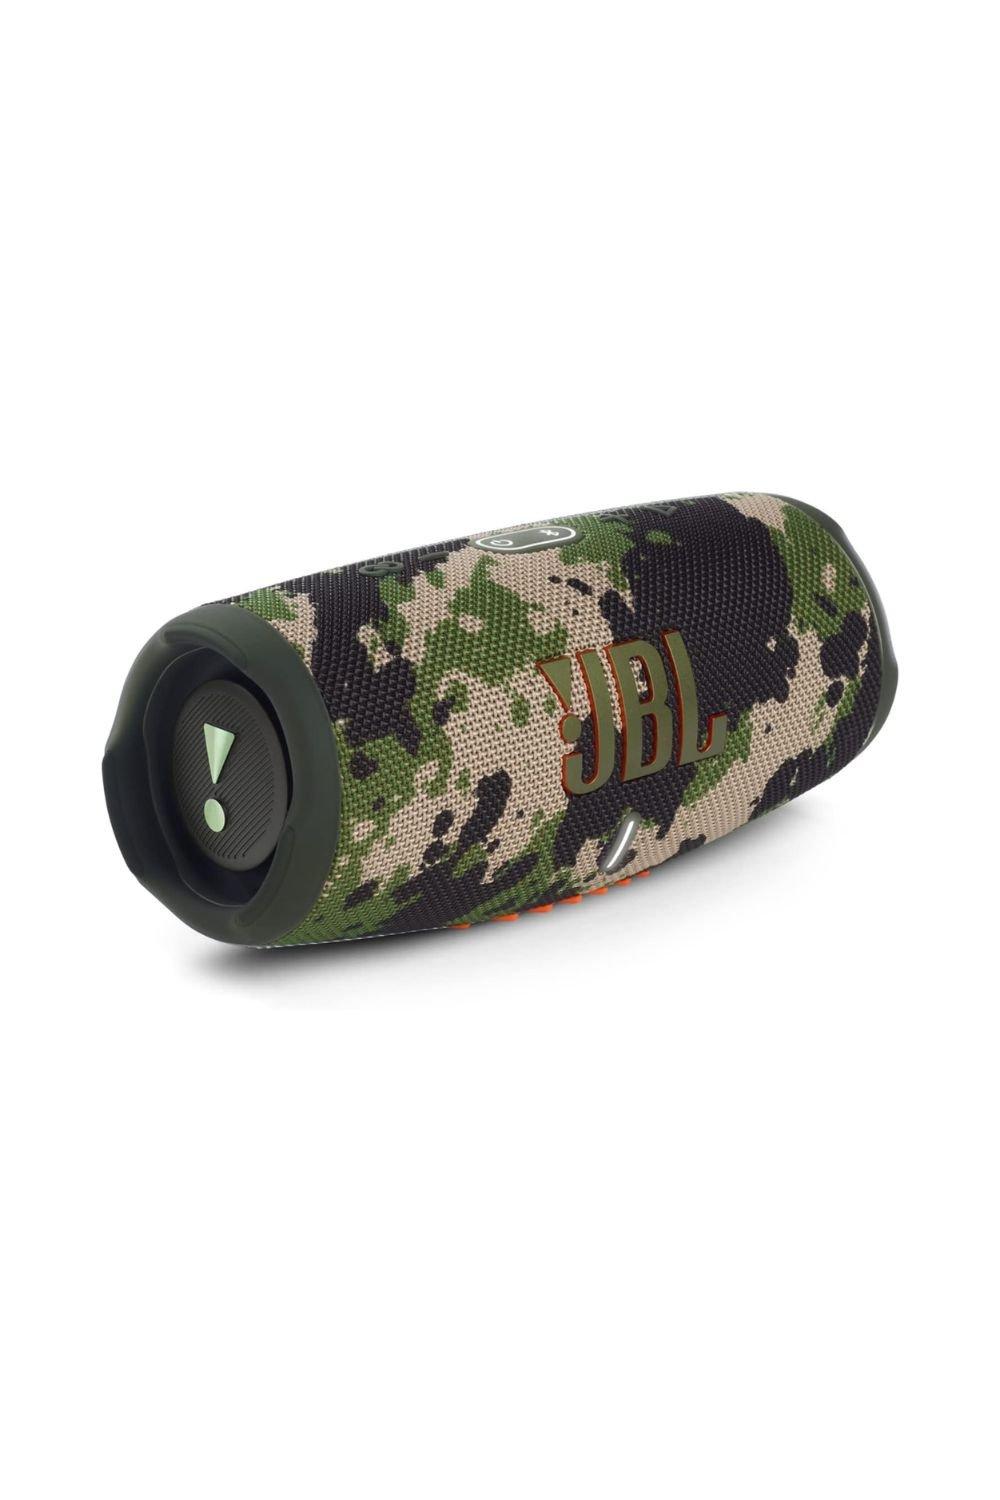 JBL Charge 5 Wireless Speaker - Camouflage